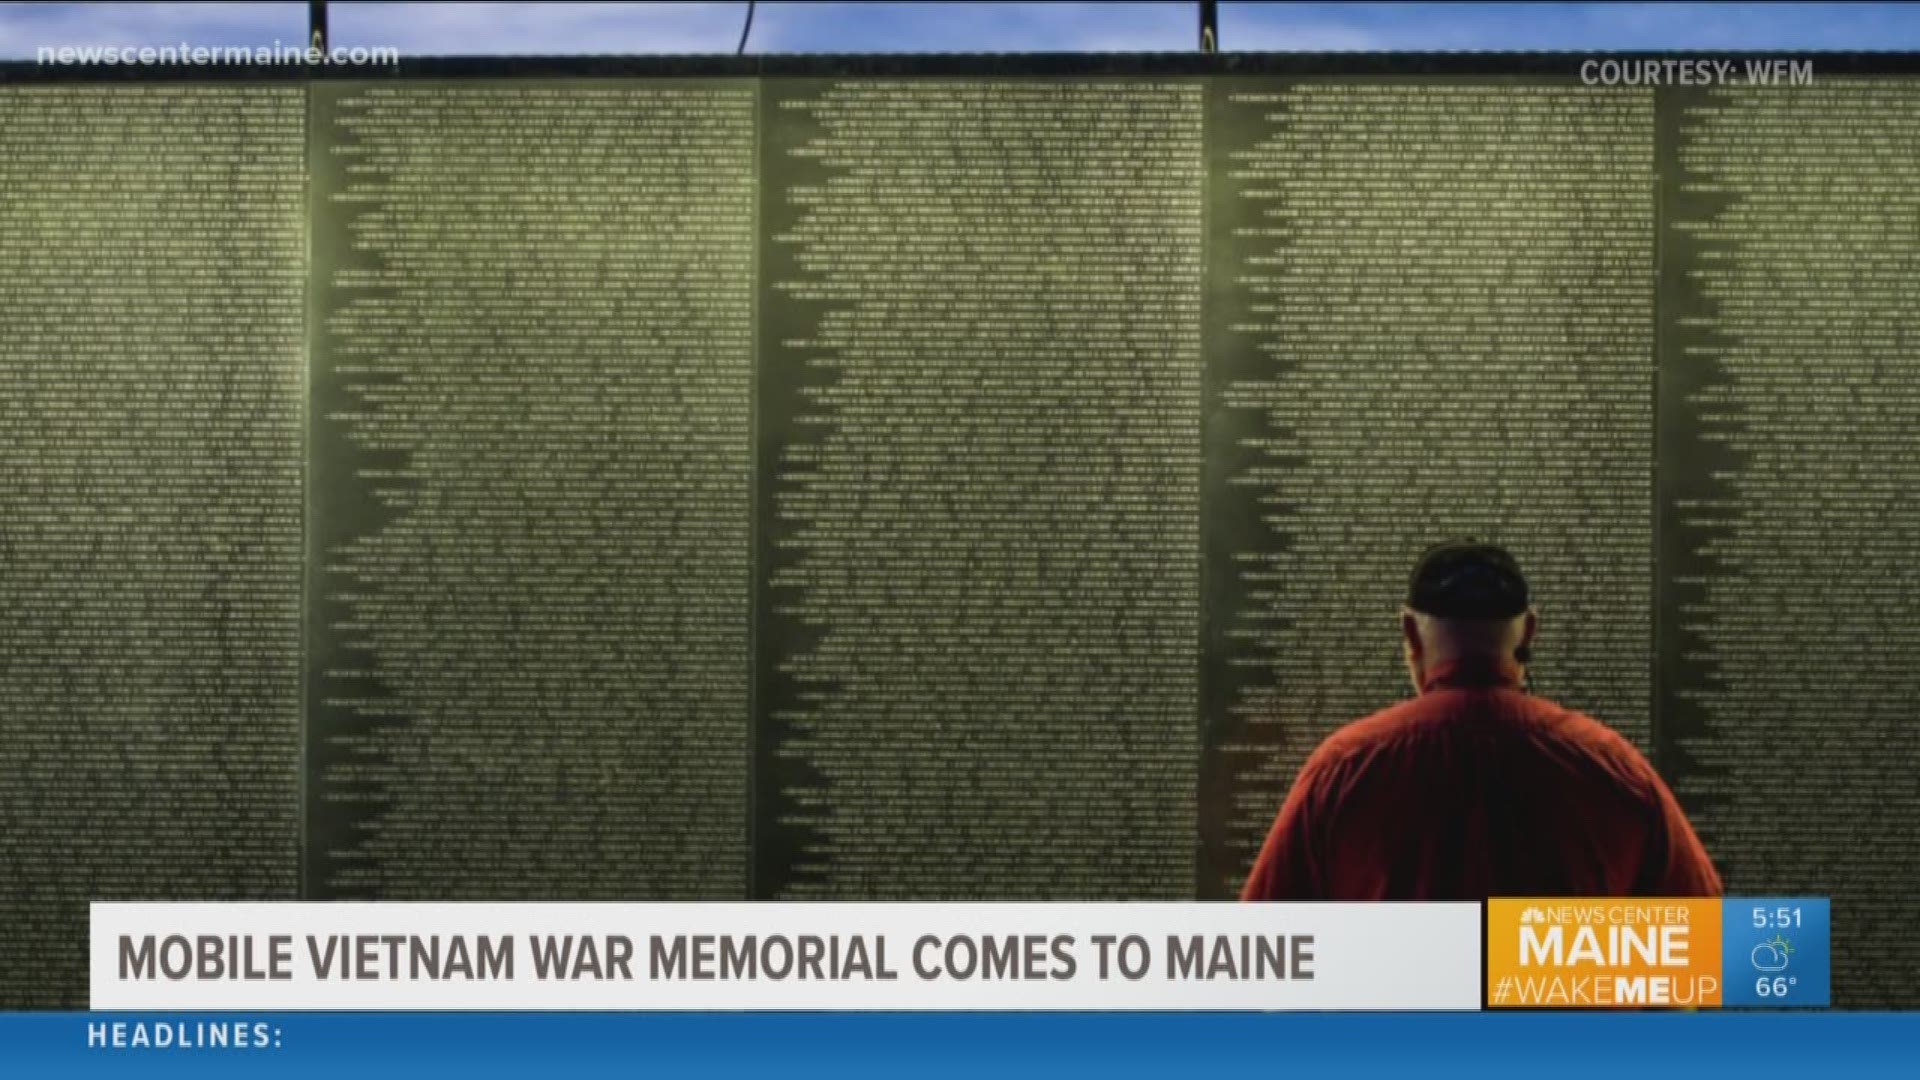 Mobile Vietnam War memorial comes to Maine